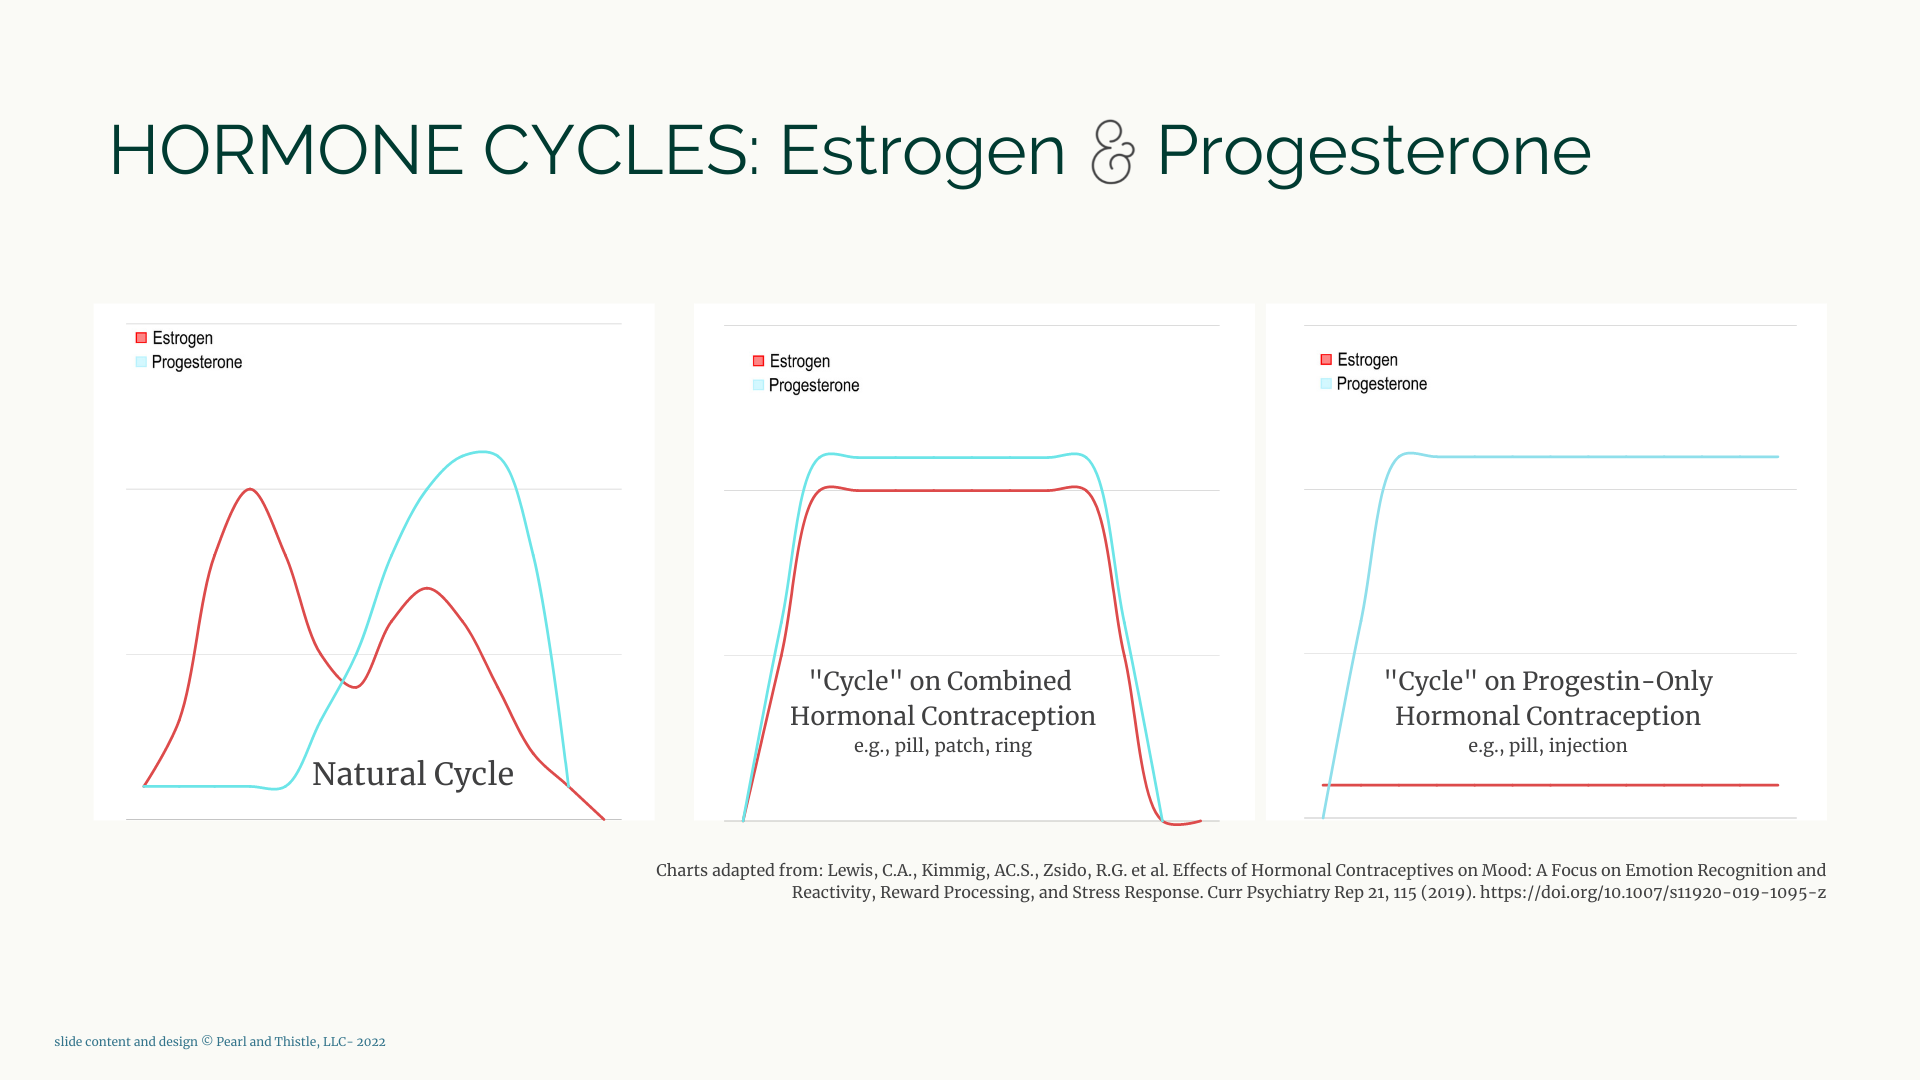 Sample presentation slide with hormone chart graphs about Estrogen and Progesterone